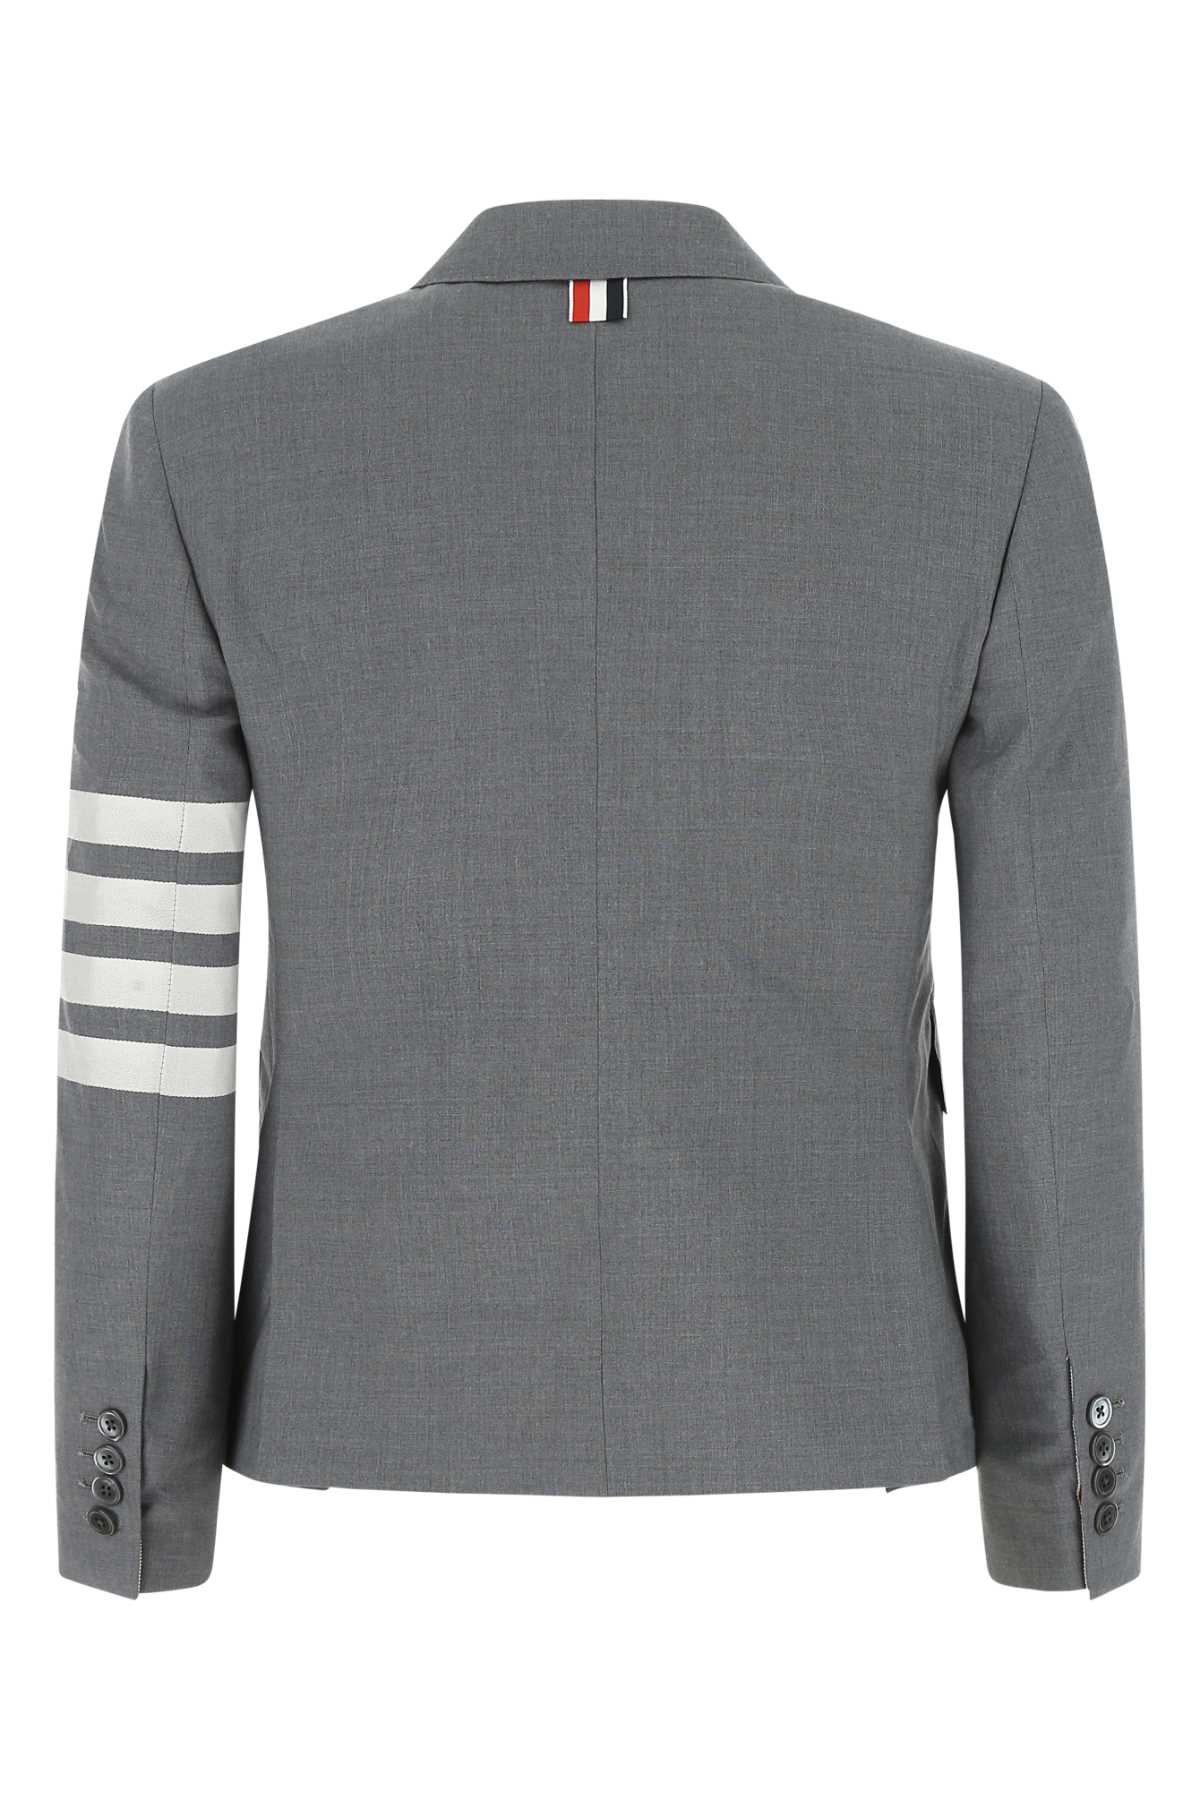 Thom Browne Grey Wool Blazer In 035